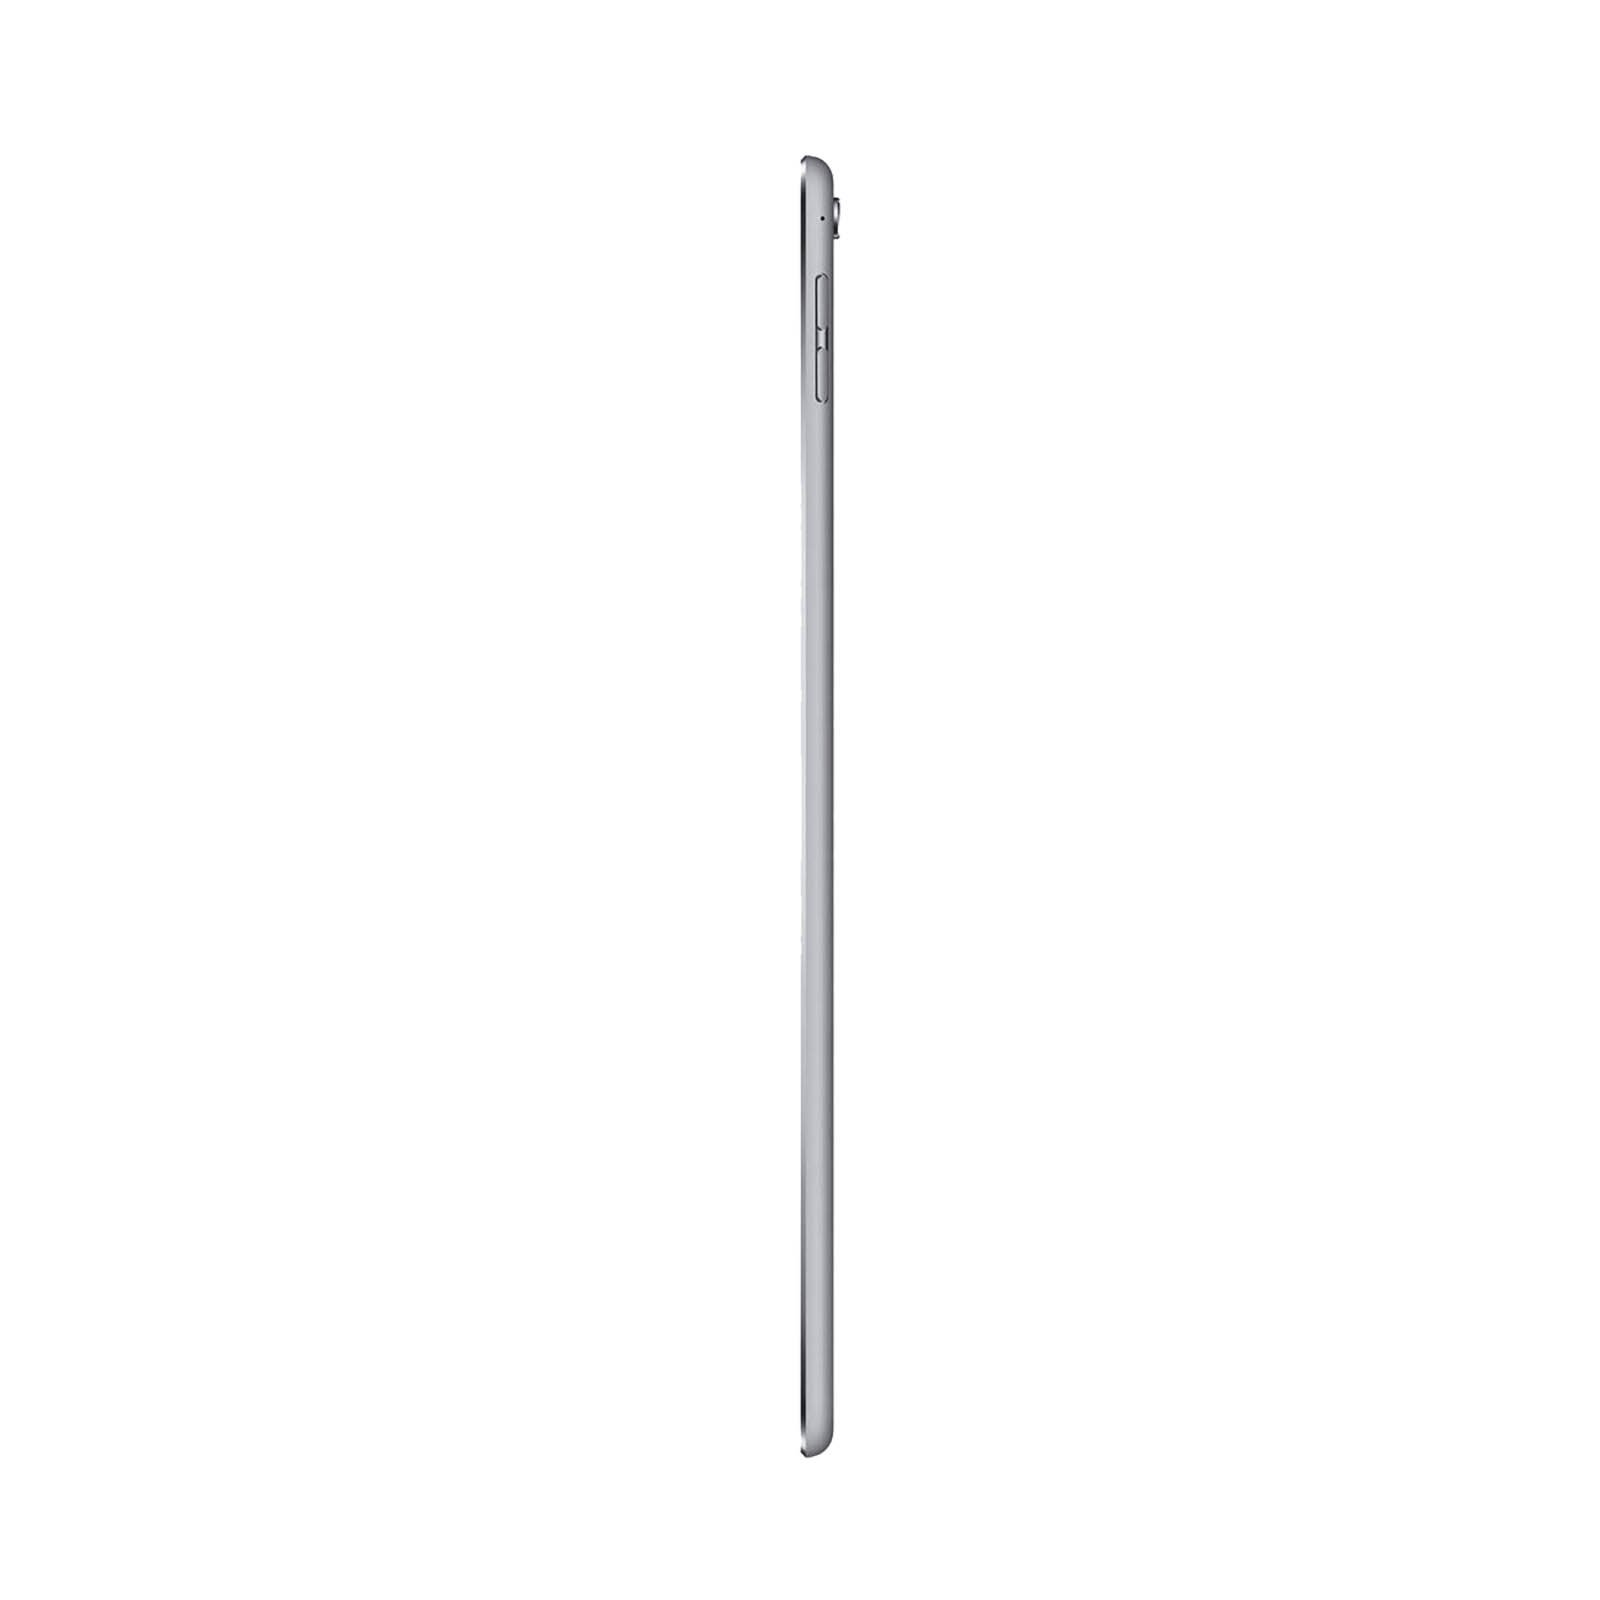 iPad Pro 9.7 Inch 256GB Space Grey Very Good - Unlocked